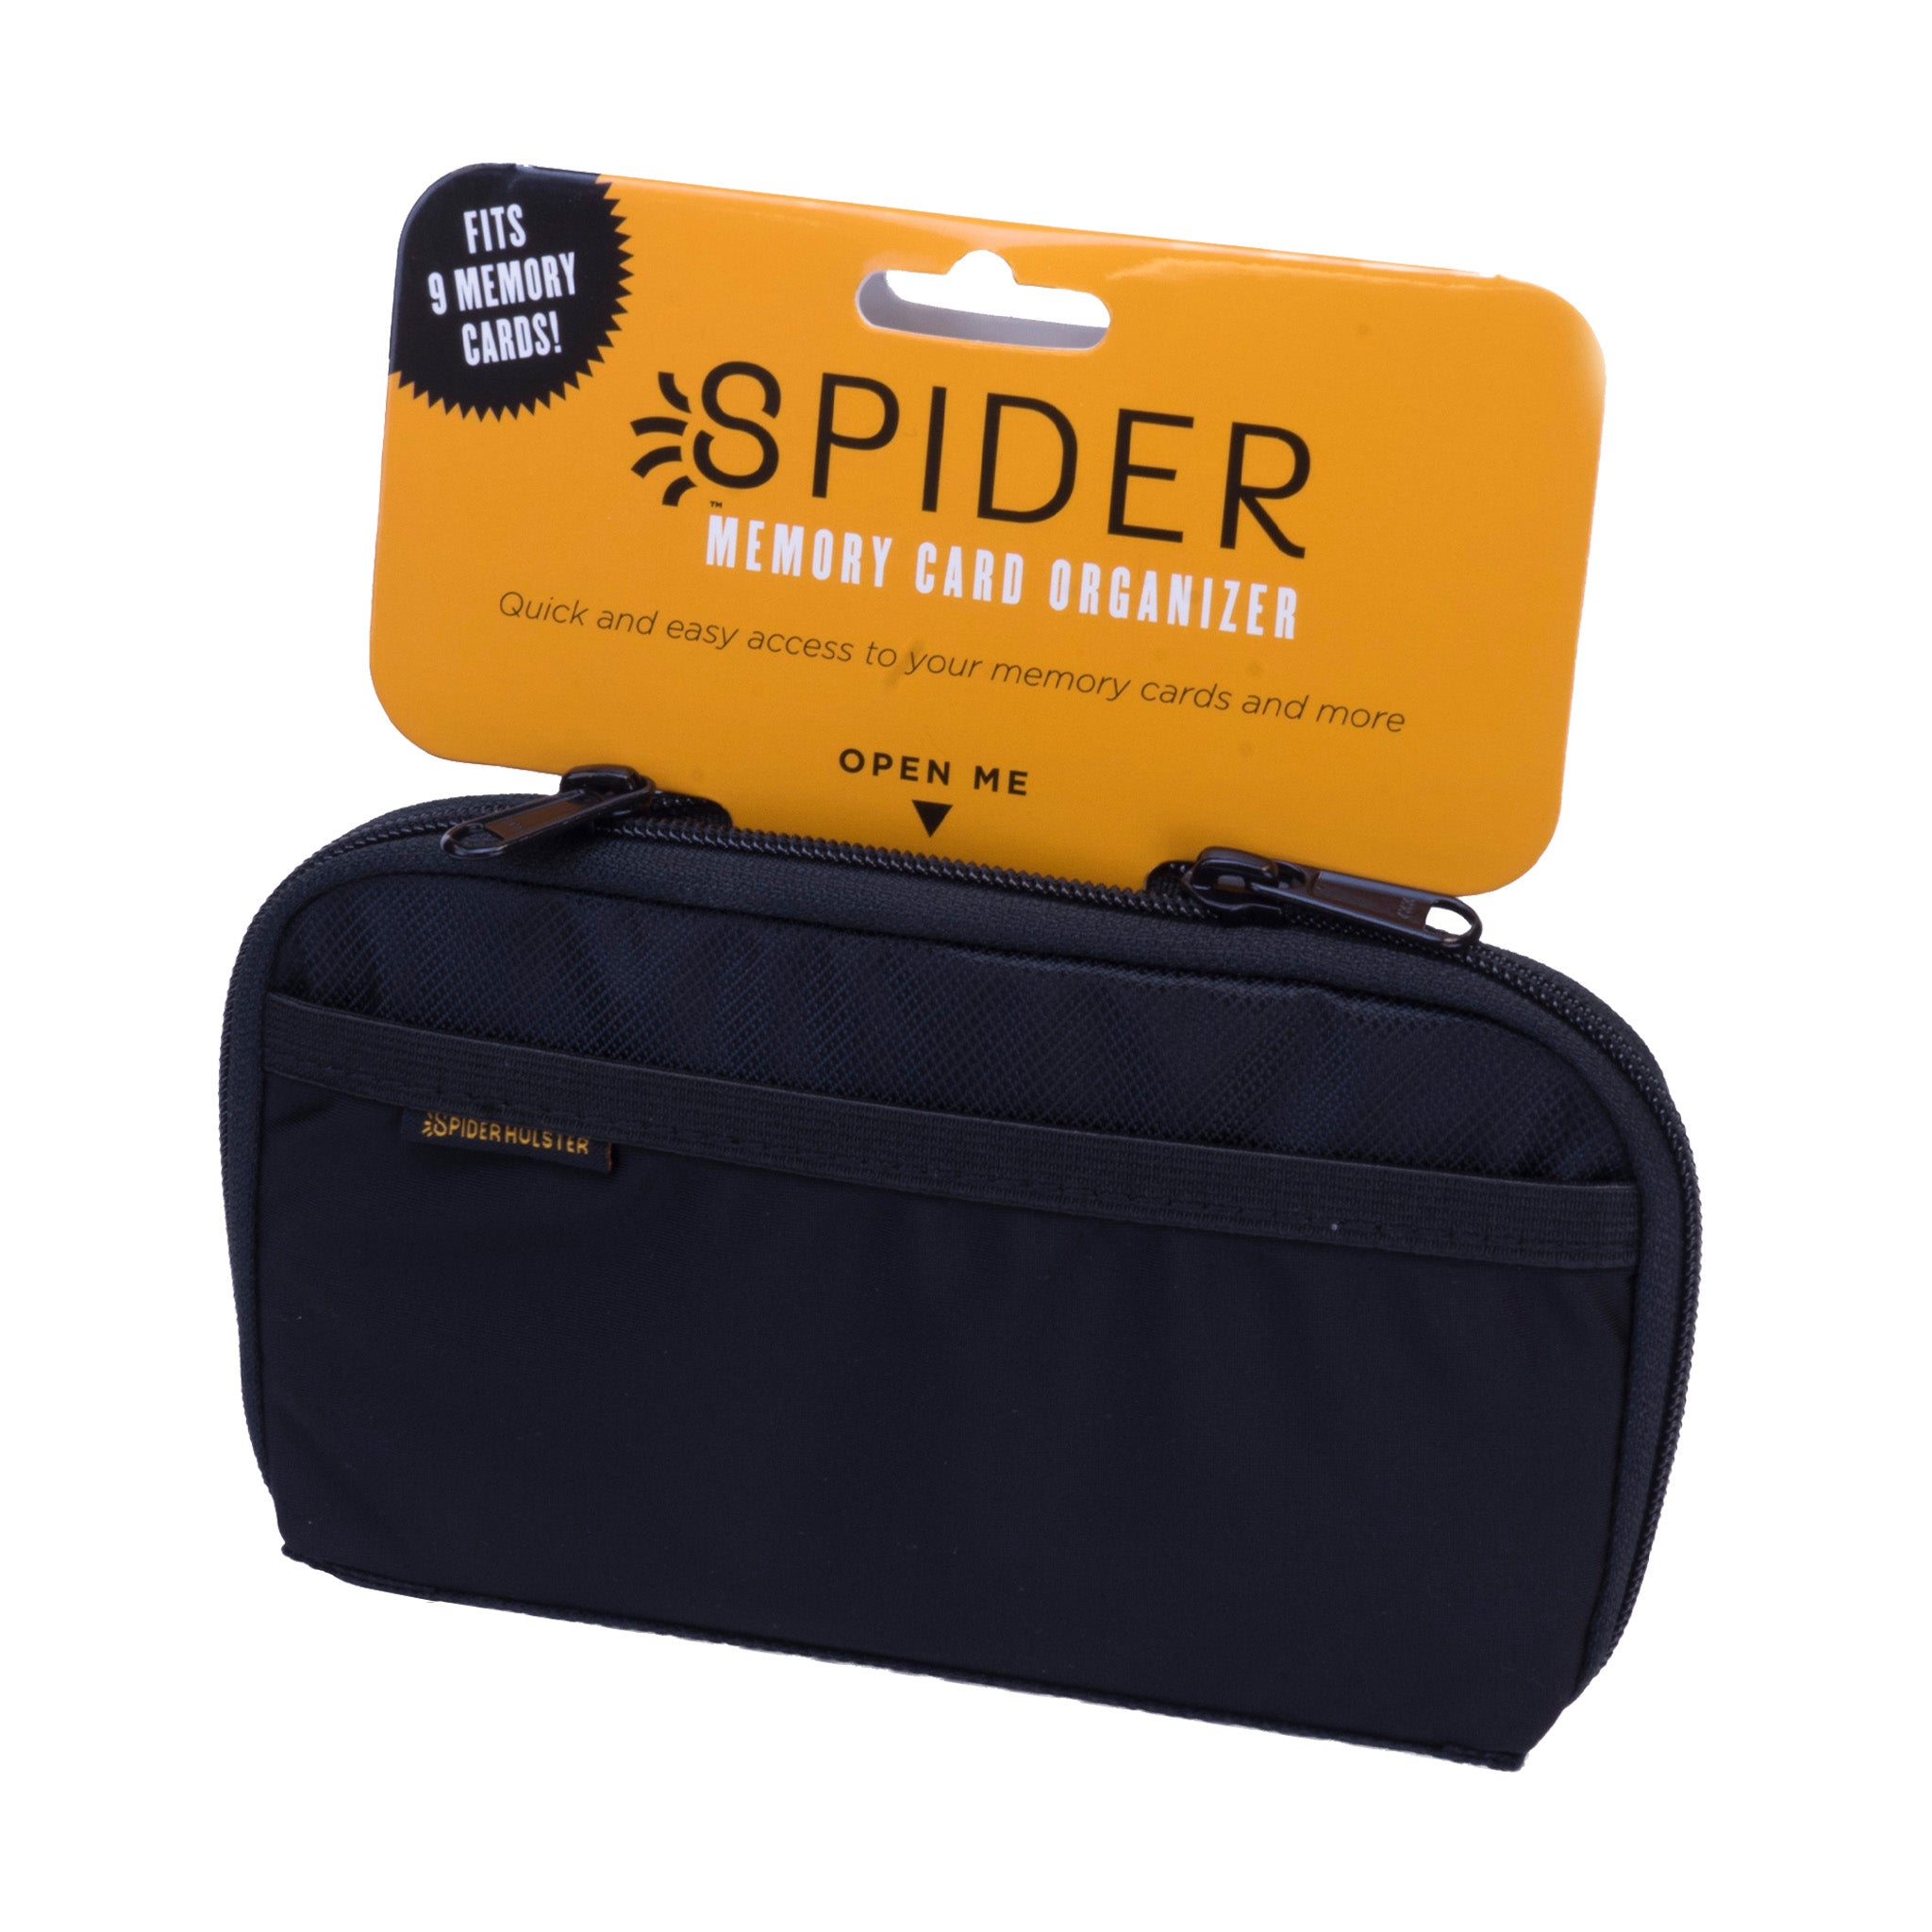 951: SpiderPro Memory Card Organizer v2